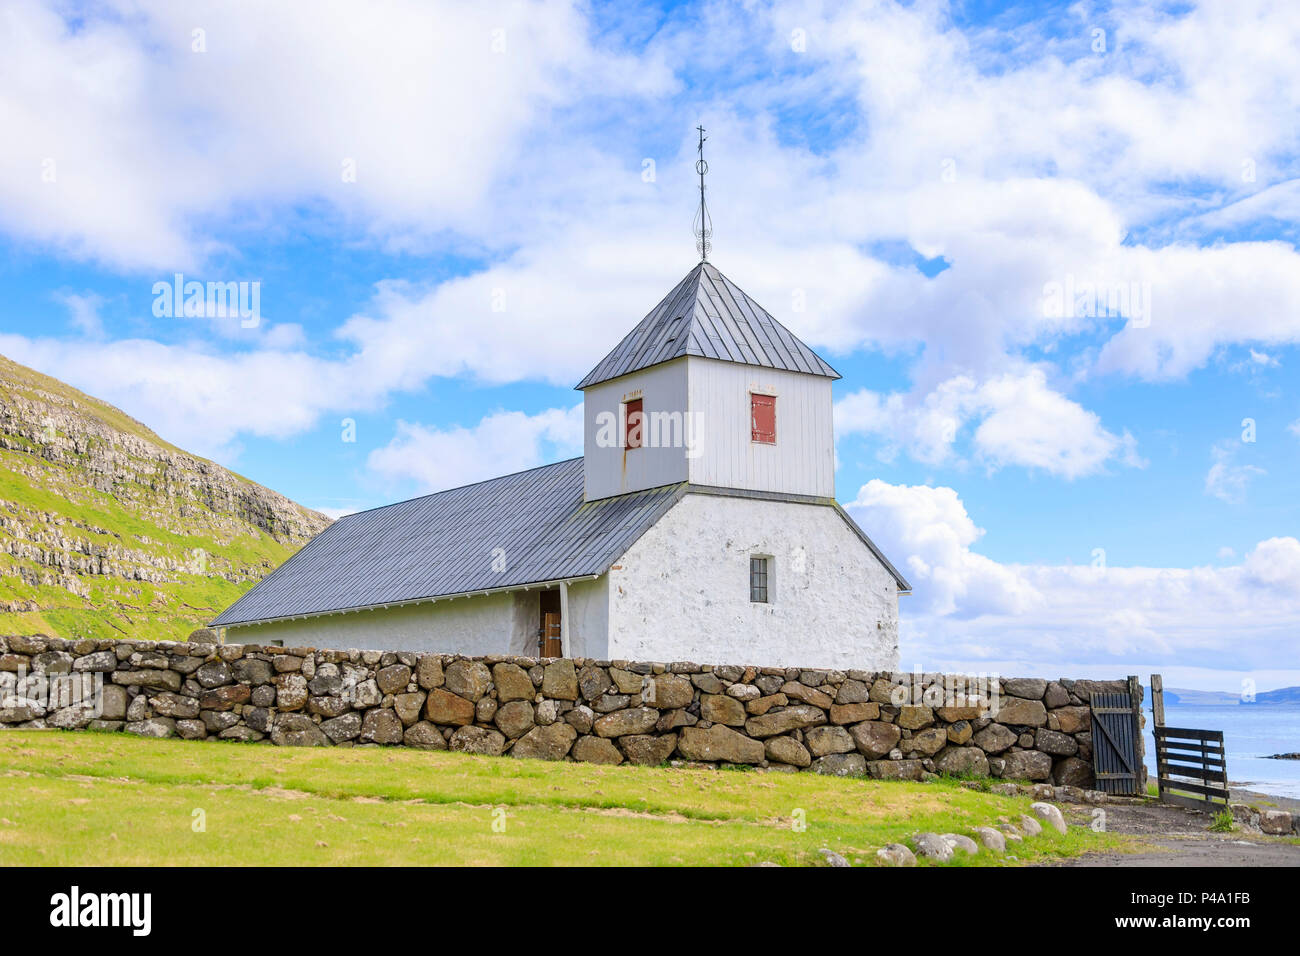 Saint Olav's Church, Kirkjubour, Streymoy island, Faroe Islands, Denmark Stock Photo